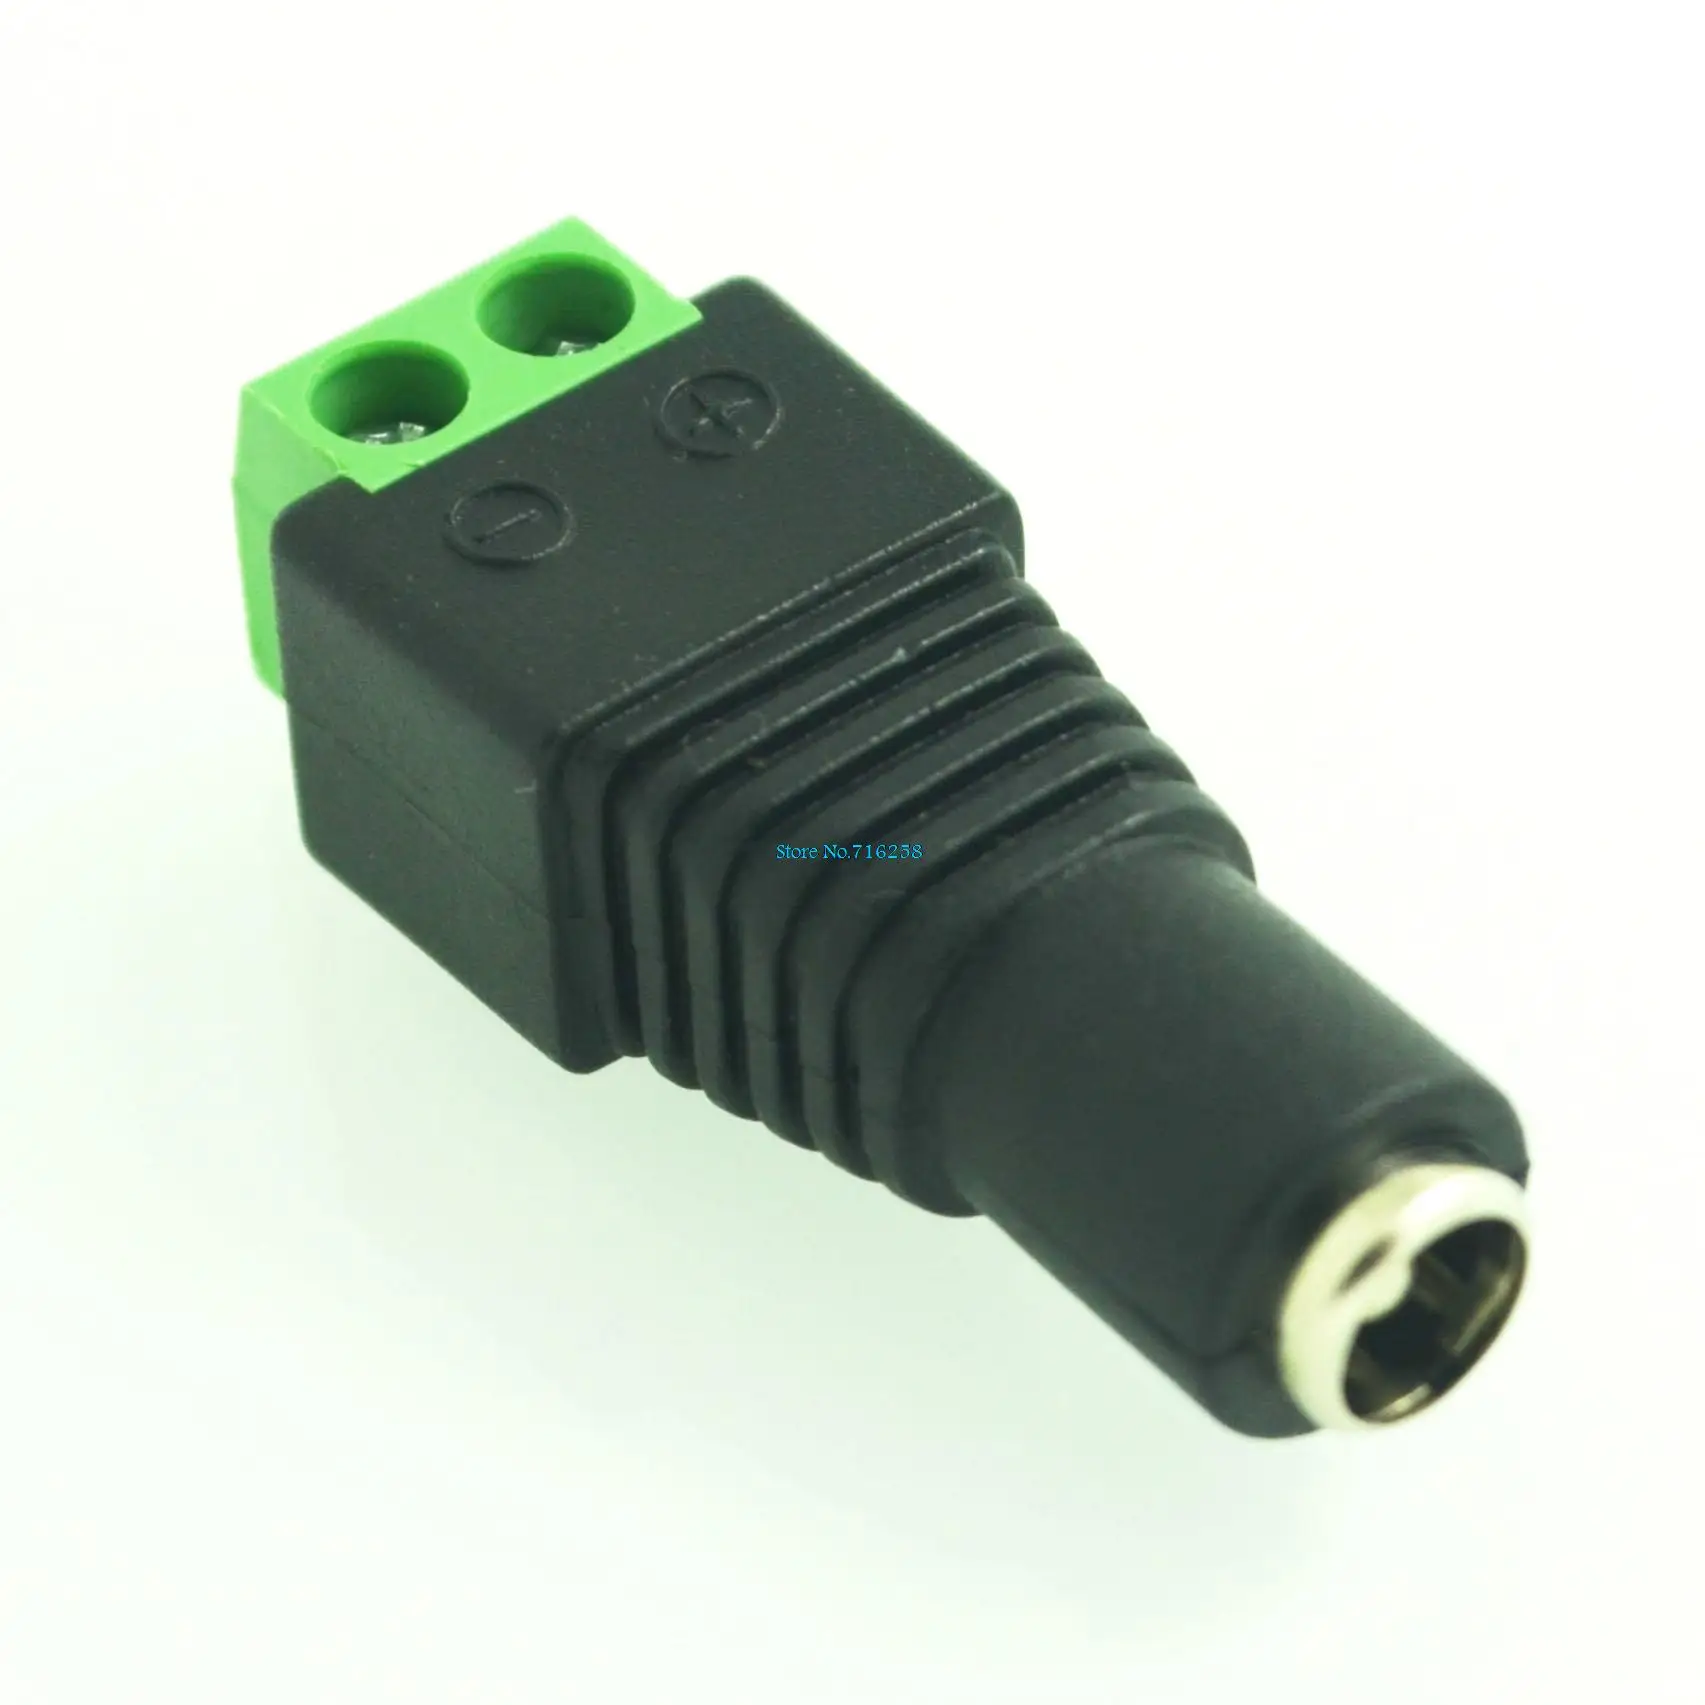 10Pcs 12V 2.1 x 5.5mm DC Power Female Plug Jack Adapter Connector Plug for CCTV single color LED Light